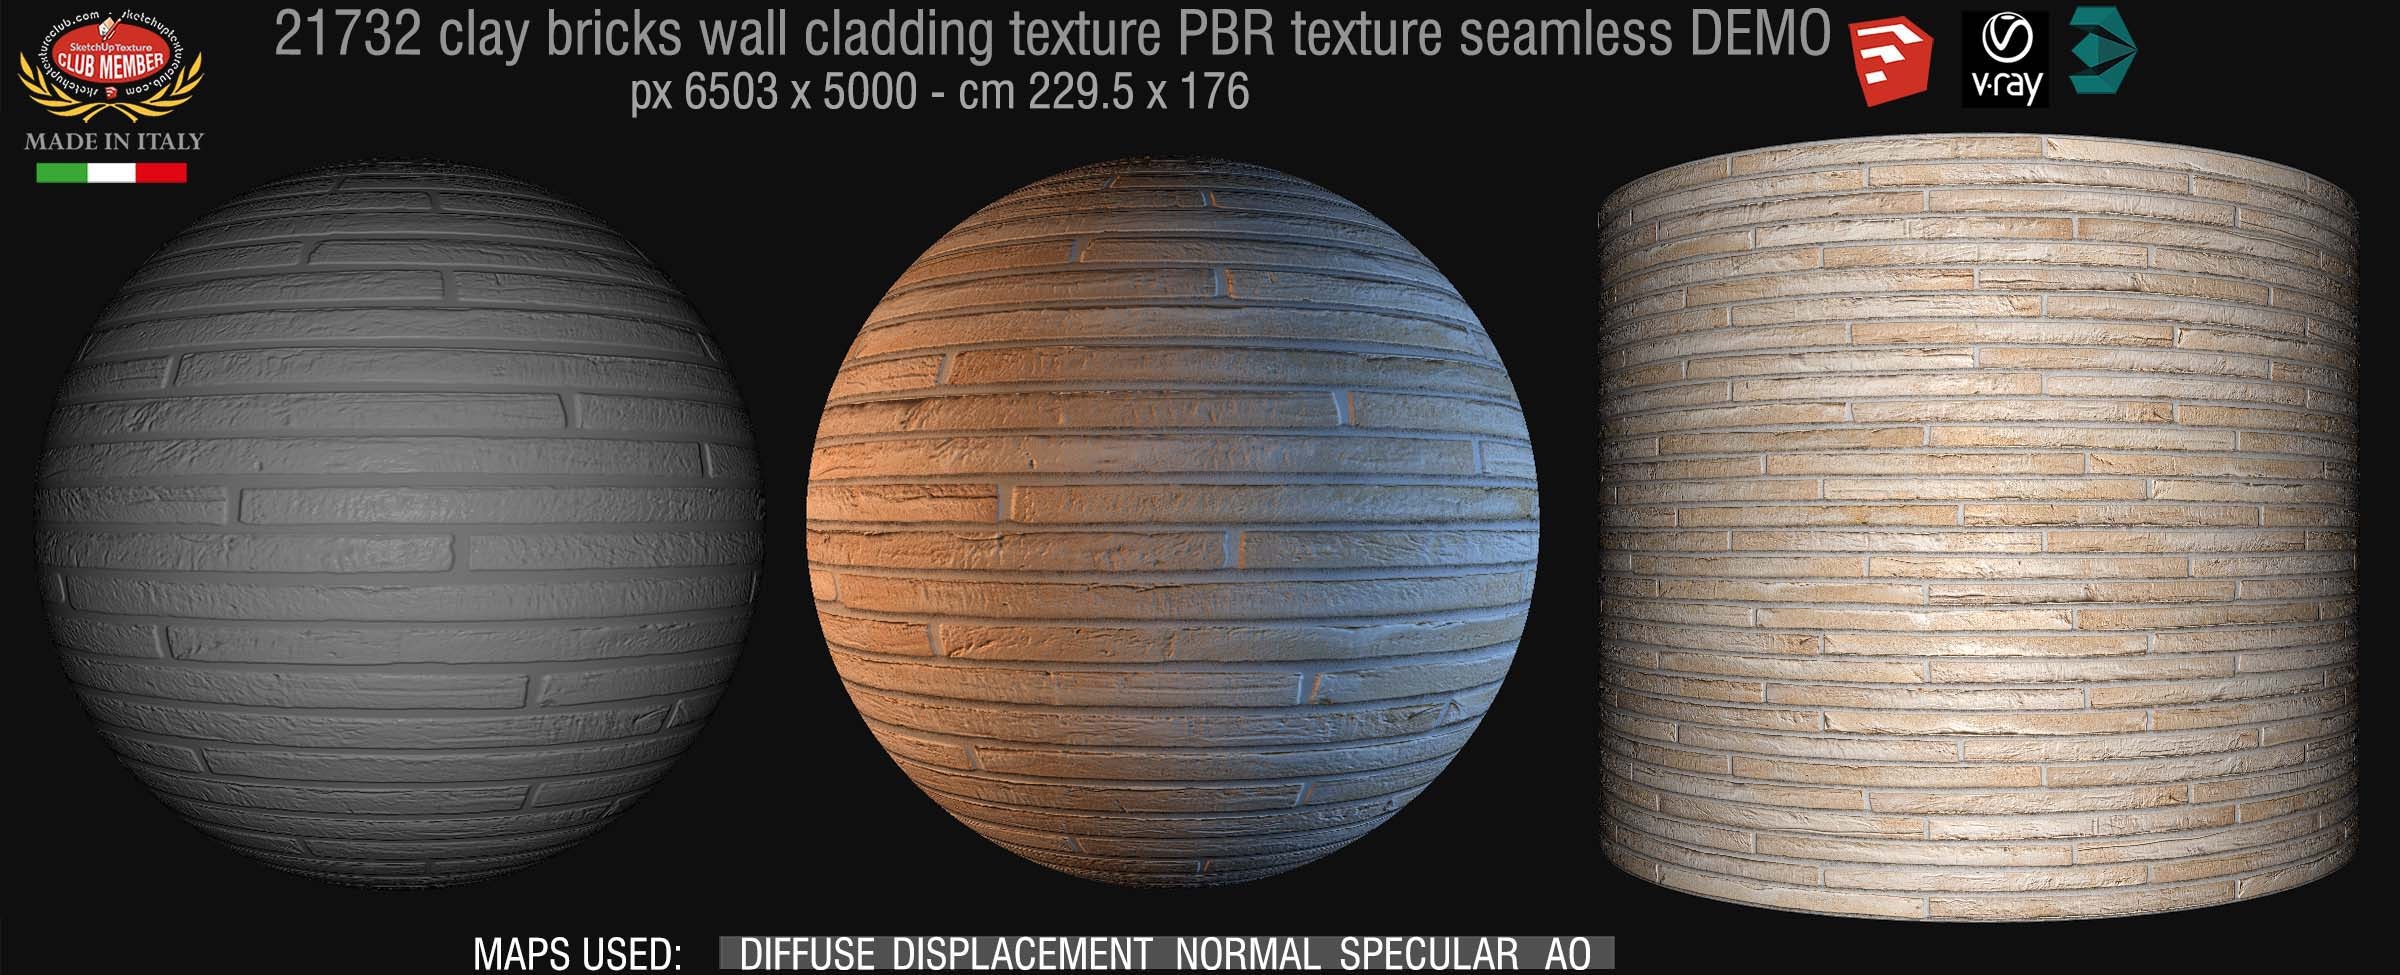 21732 Clay bricks wall cladding PBR texture seamless DEMO